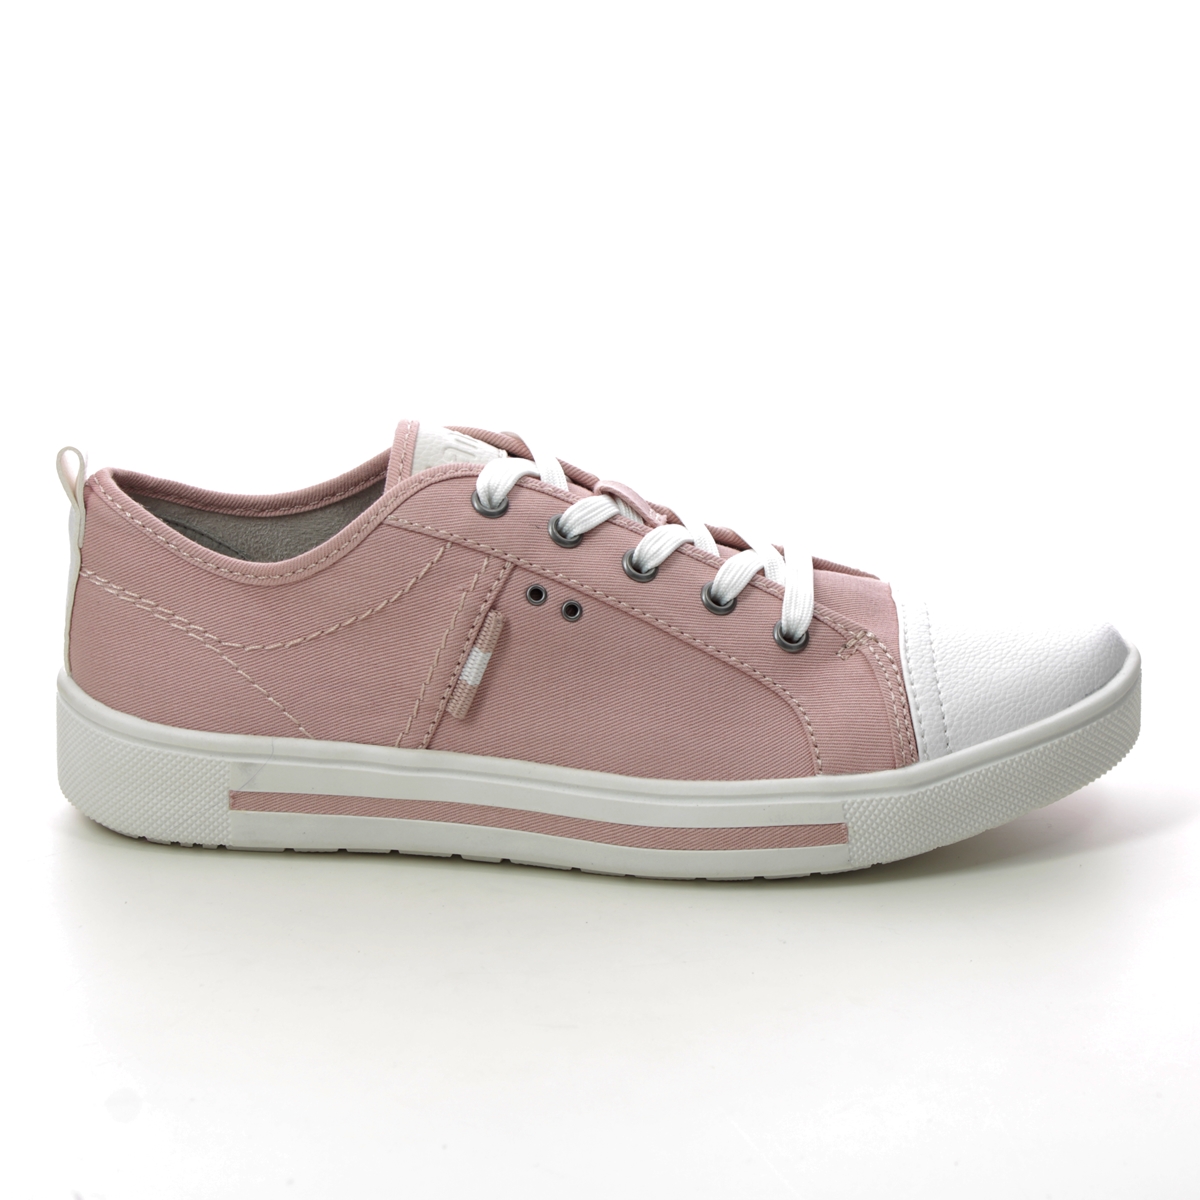 Jana Altocanvas Wide 23664-28-521 Rose pink trainers